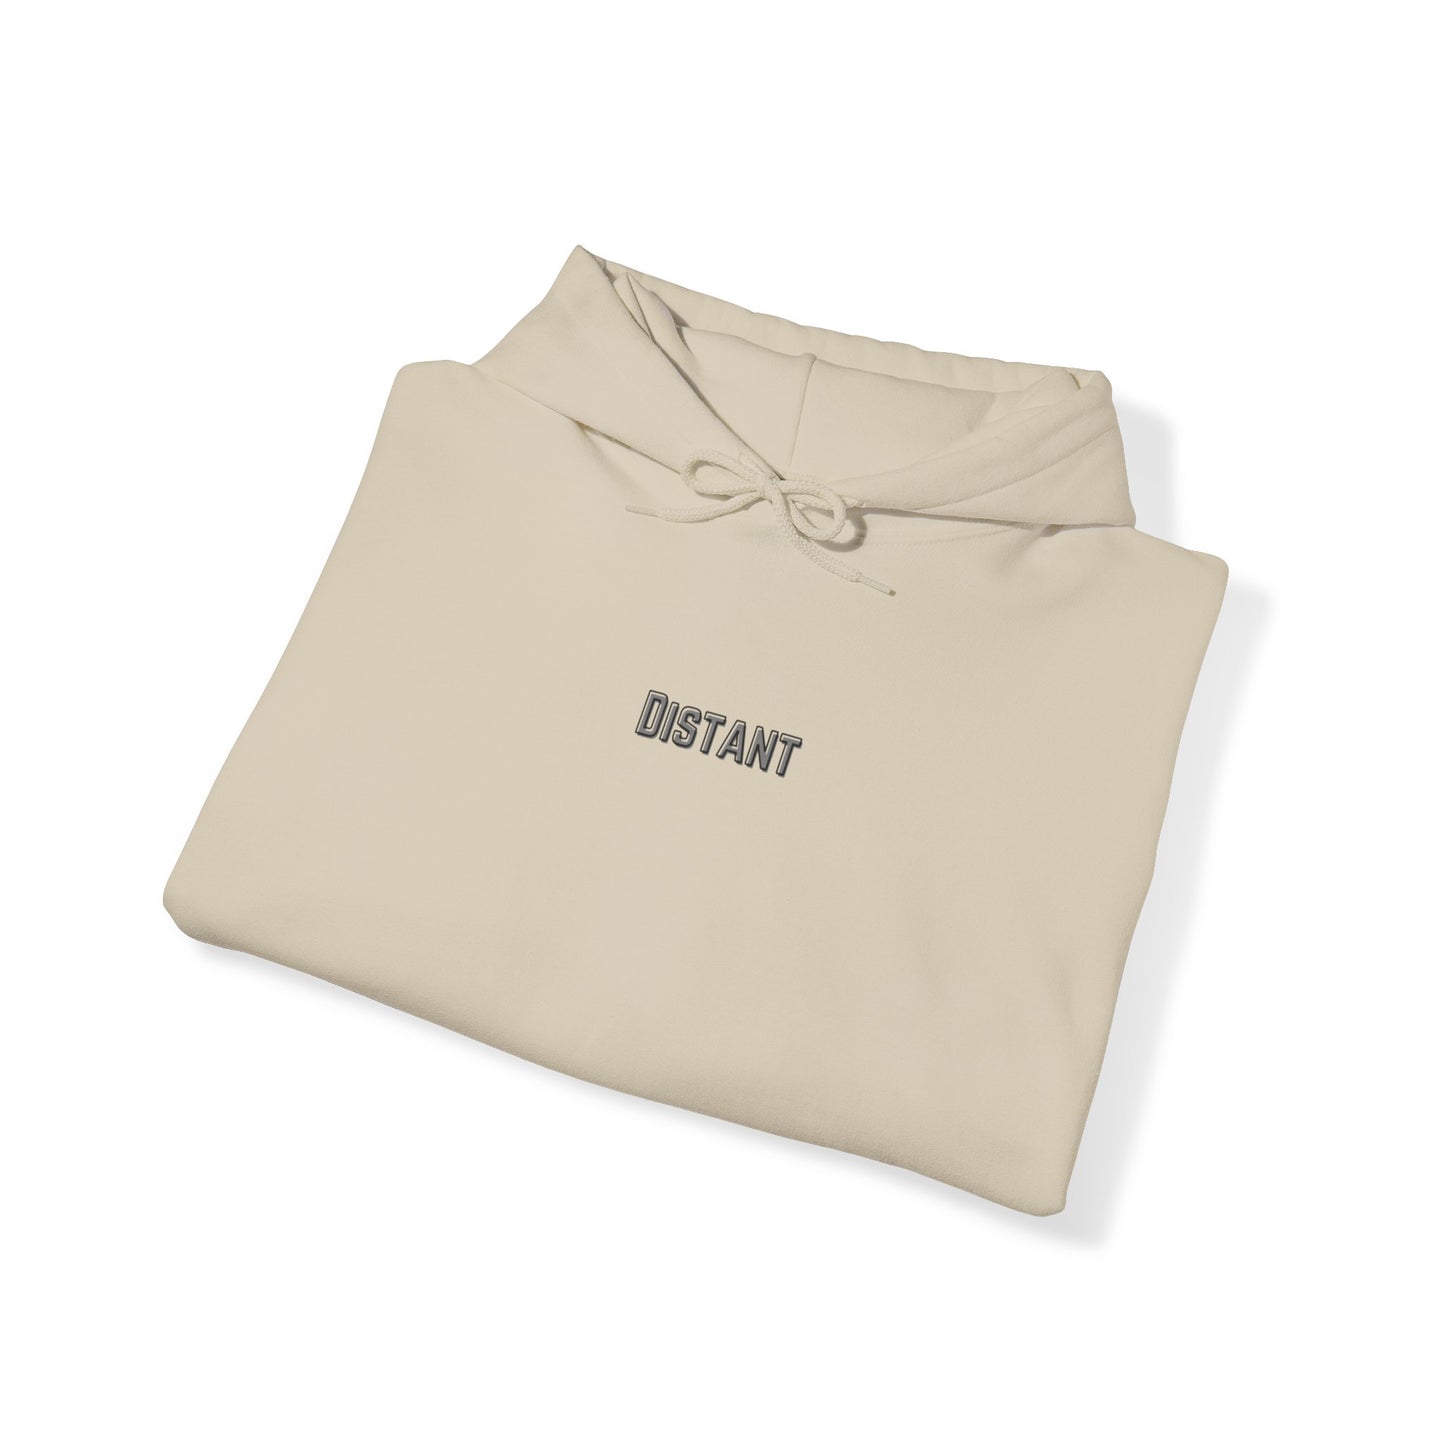 Binafsi Basics: Distant - Hooded Sweatshirt